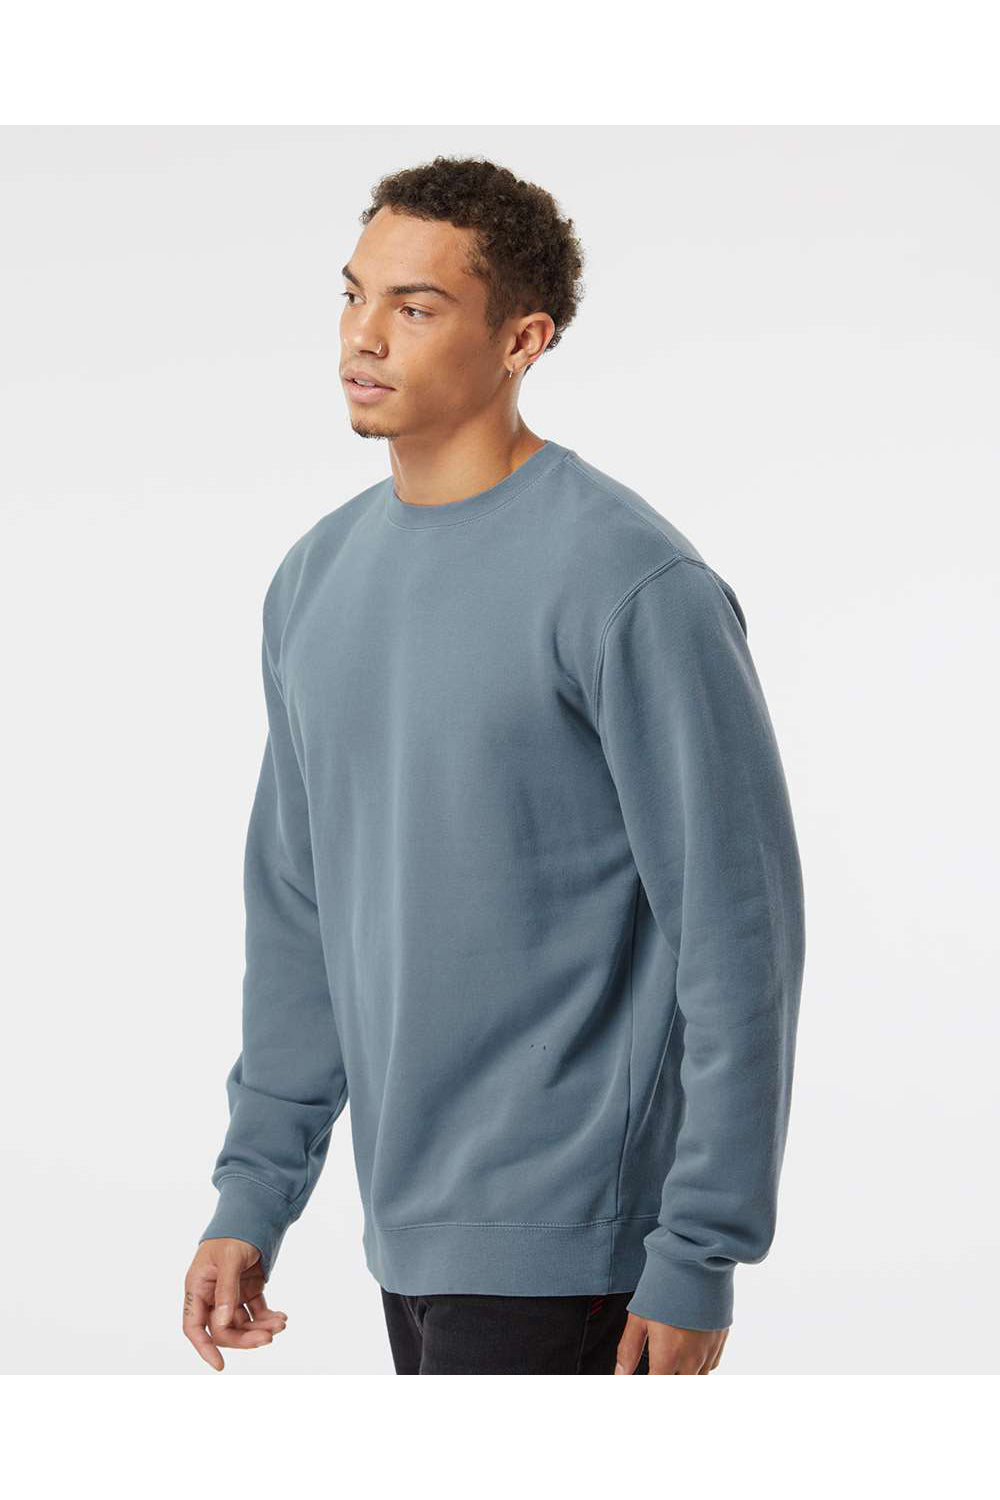 Independent Trading Co. PRM3500 Mens Pigment Dyed Crewneck Sweatshirt Slate Blue Model Side